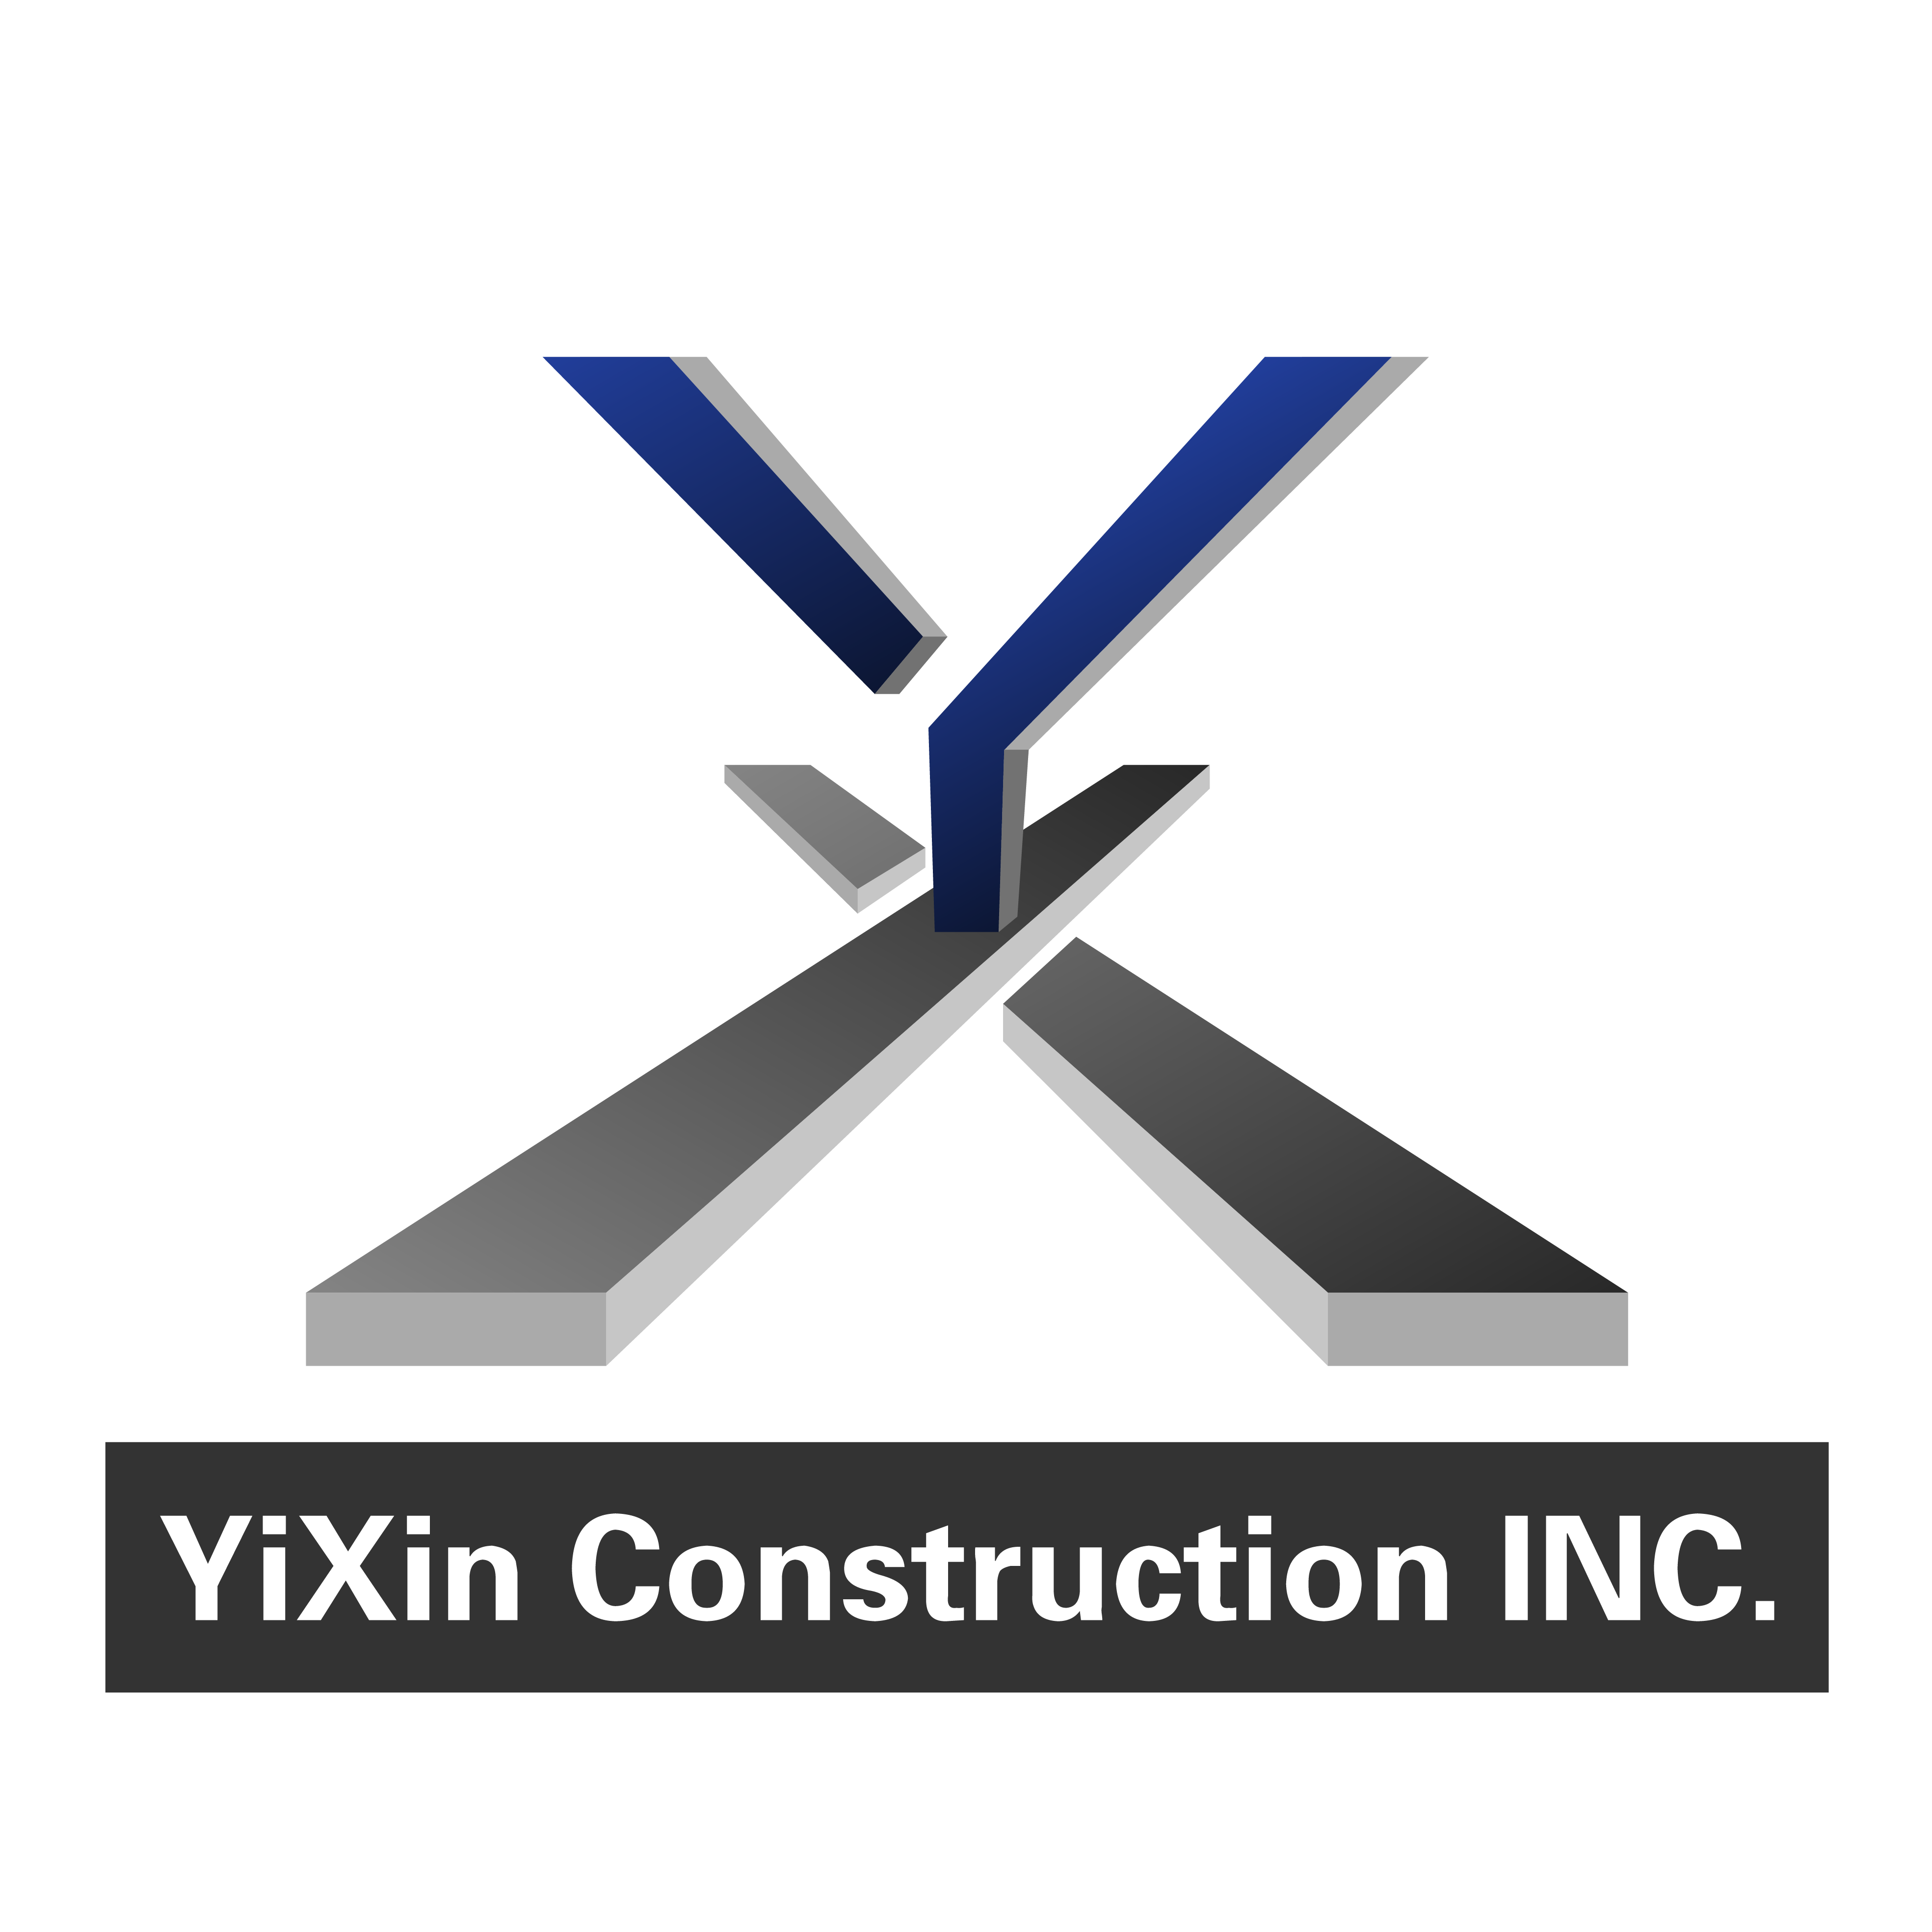 Yixin Construction Inc.'s logo